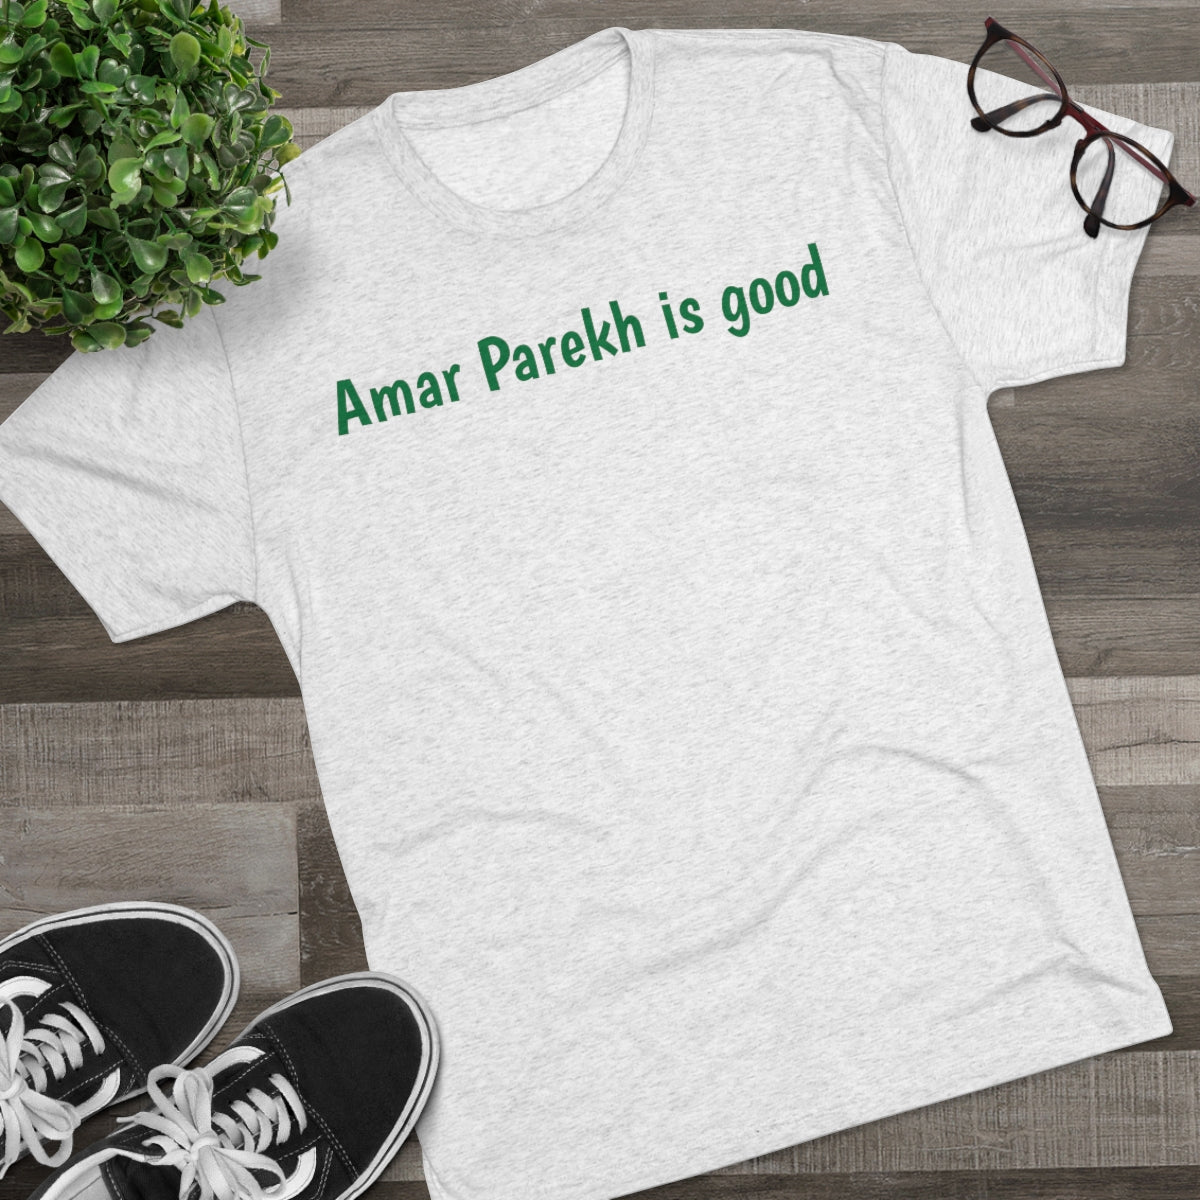 Amar Parekh is good Shirt - IsGoodBrand